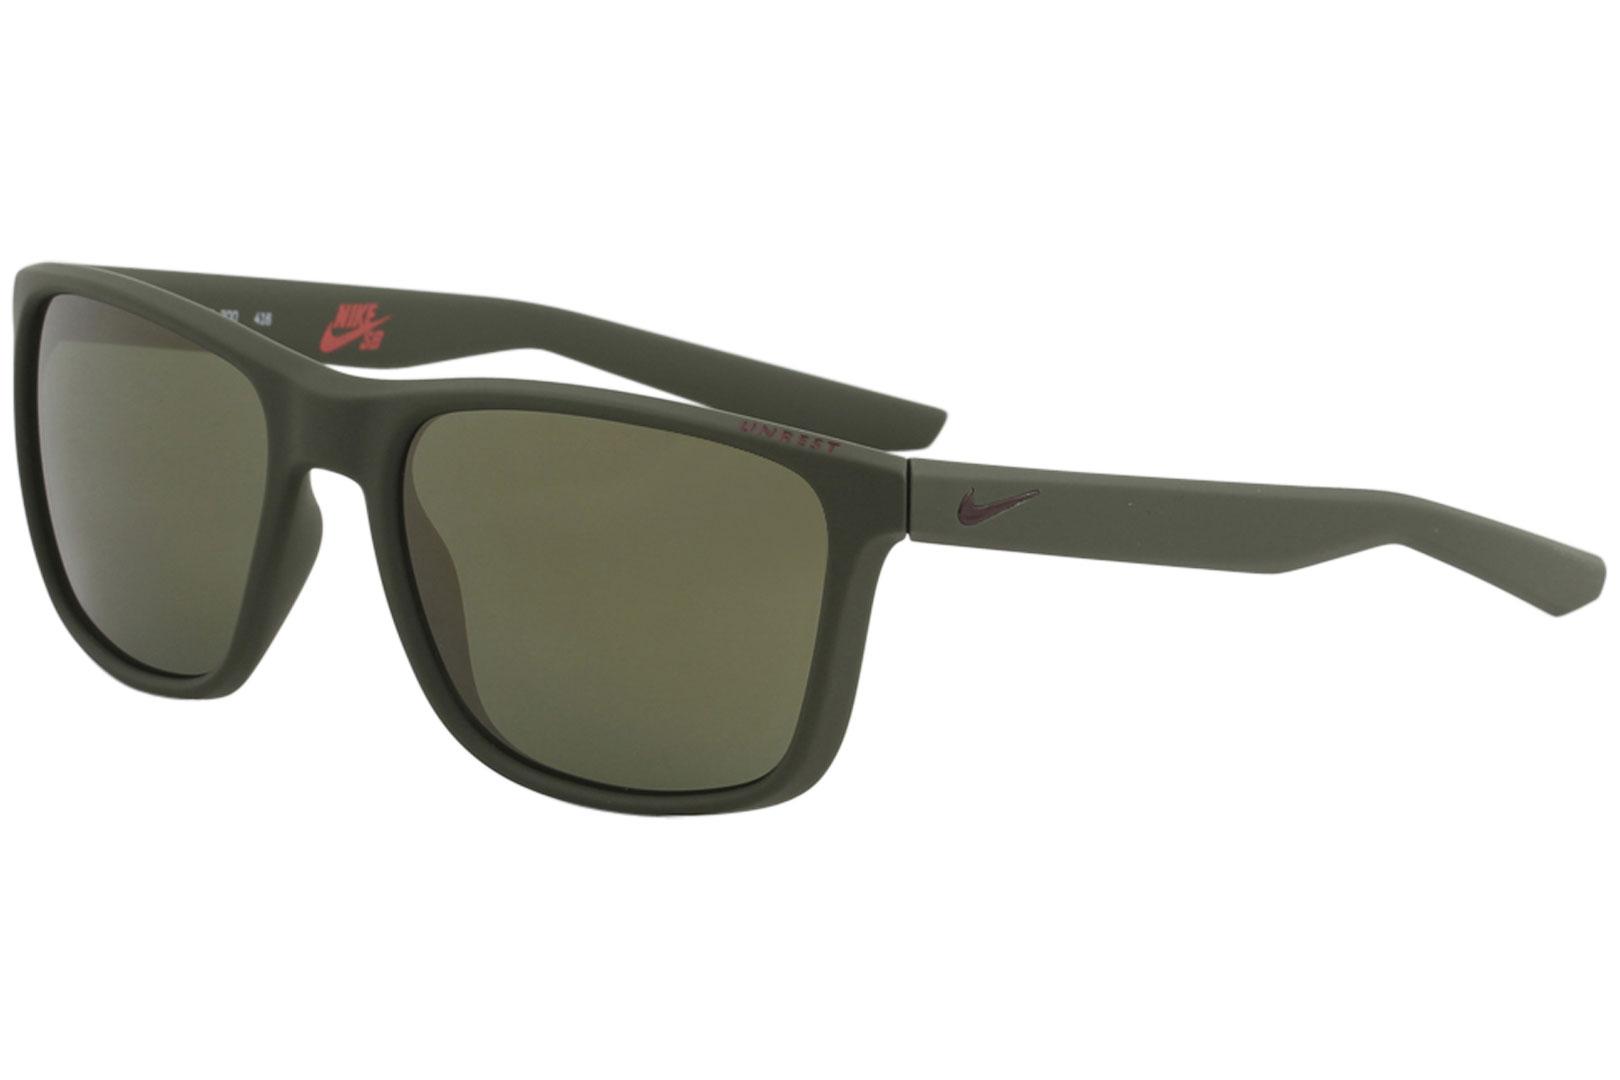 Nike SB Men's Unrest Square Sunglasses - Matte Cargo Khaki/Green Gunmetal Mirror   300 - Lens 57 Bridge 19 Temple 145mm